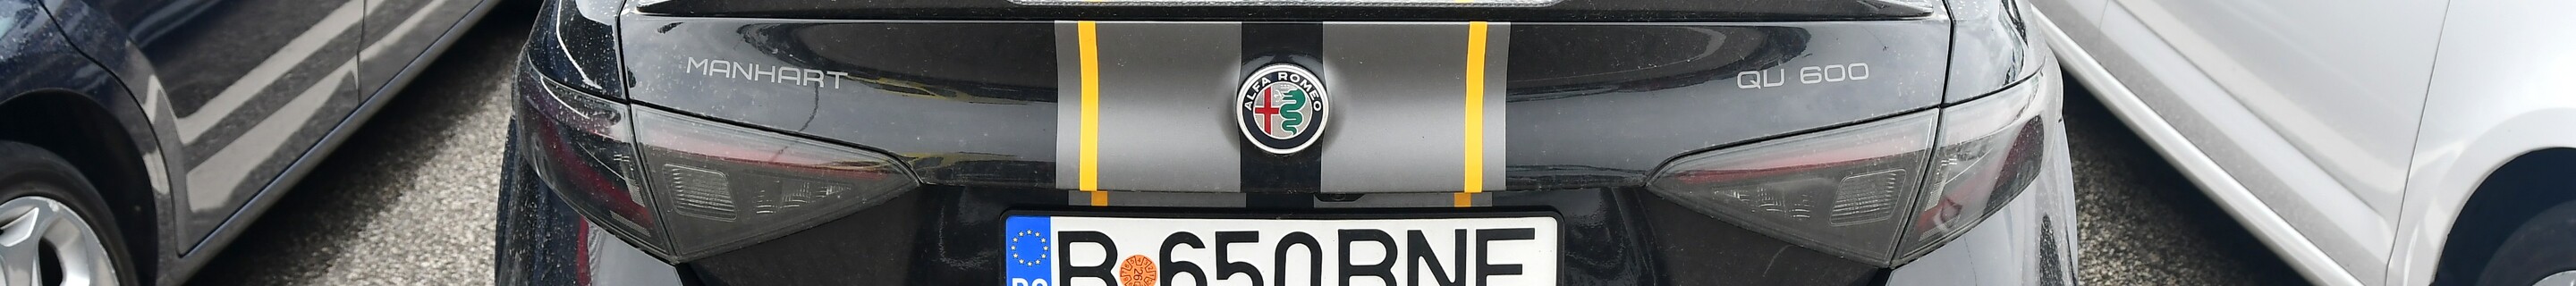 Alfa Romeo Manhart Performance QV 600